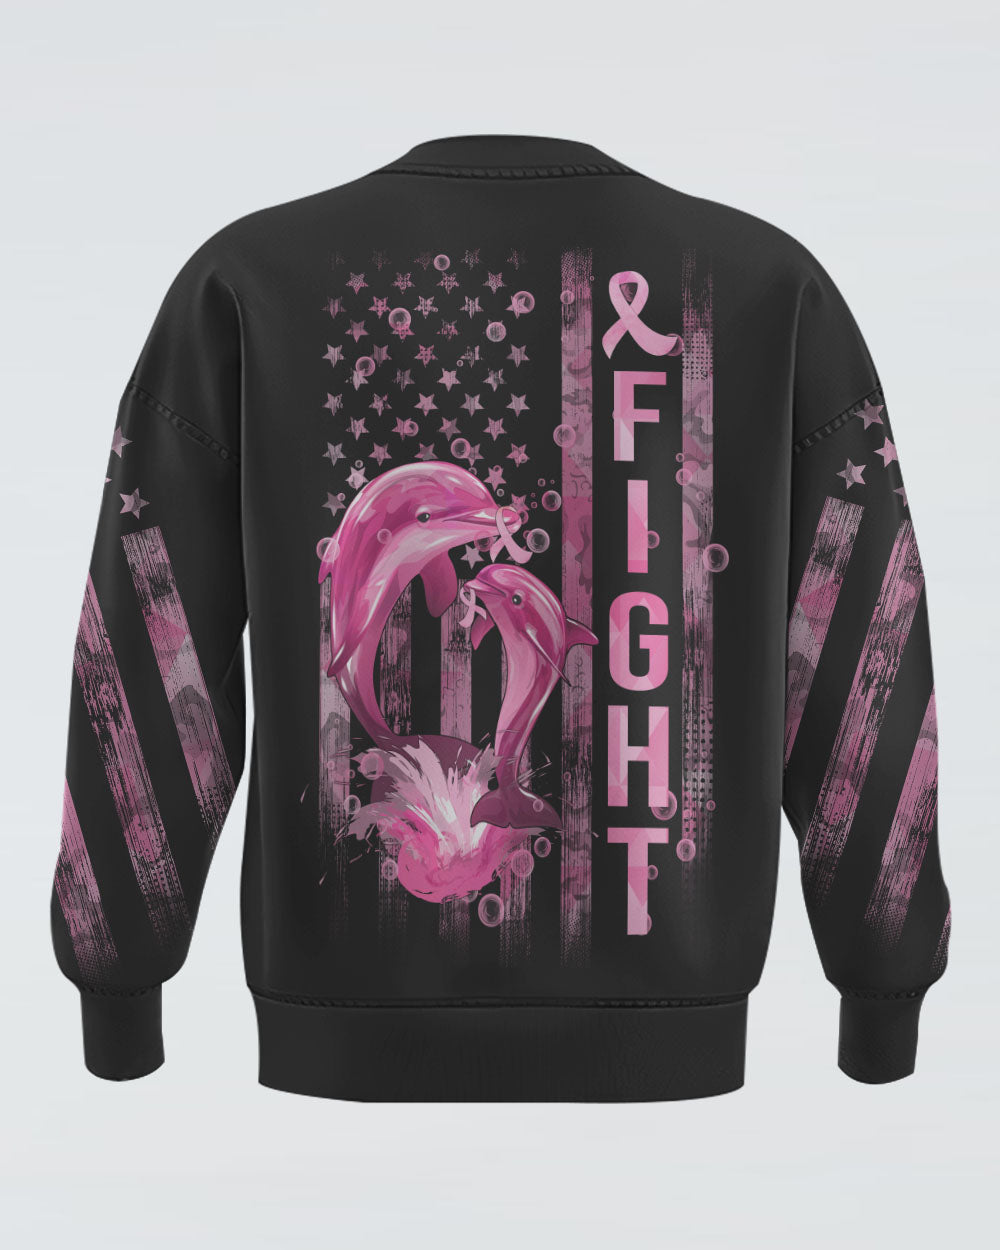 Fight Flag Dolphin Women's Breast Cancer Awareness Sweatshirt